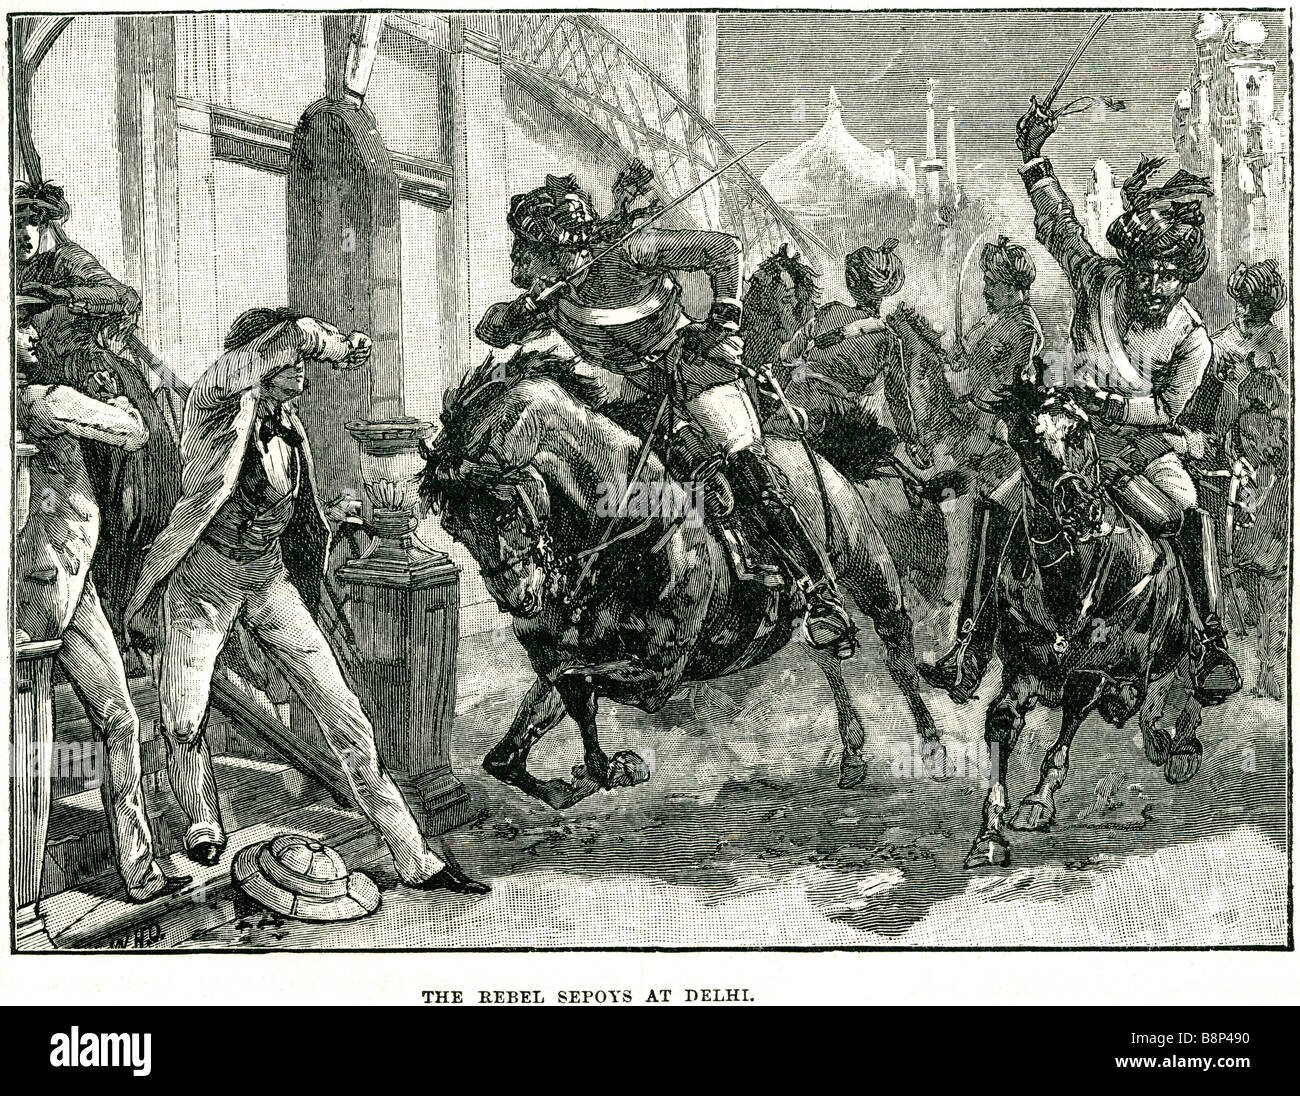 rebel sepoys at delhi Indian Rebellion of 1857 Meerut Bahadur Shah Zafar Stock Photo